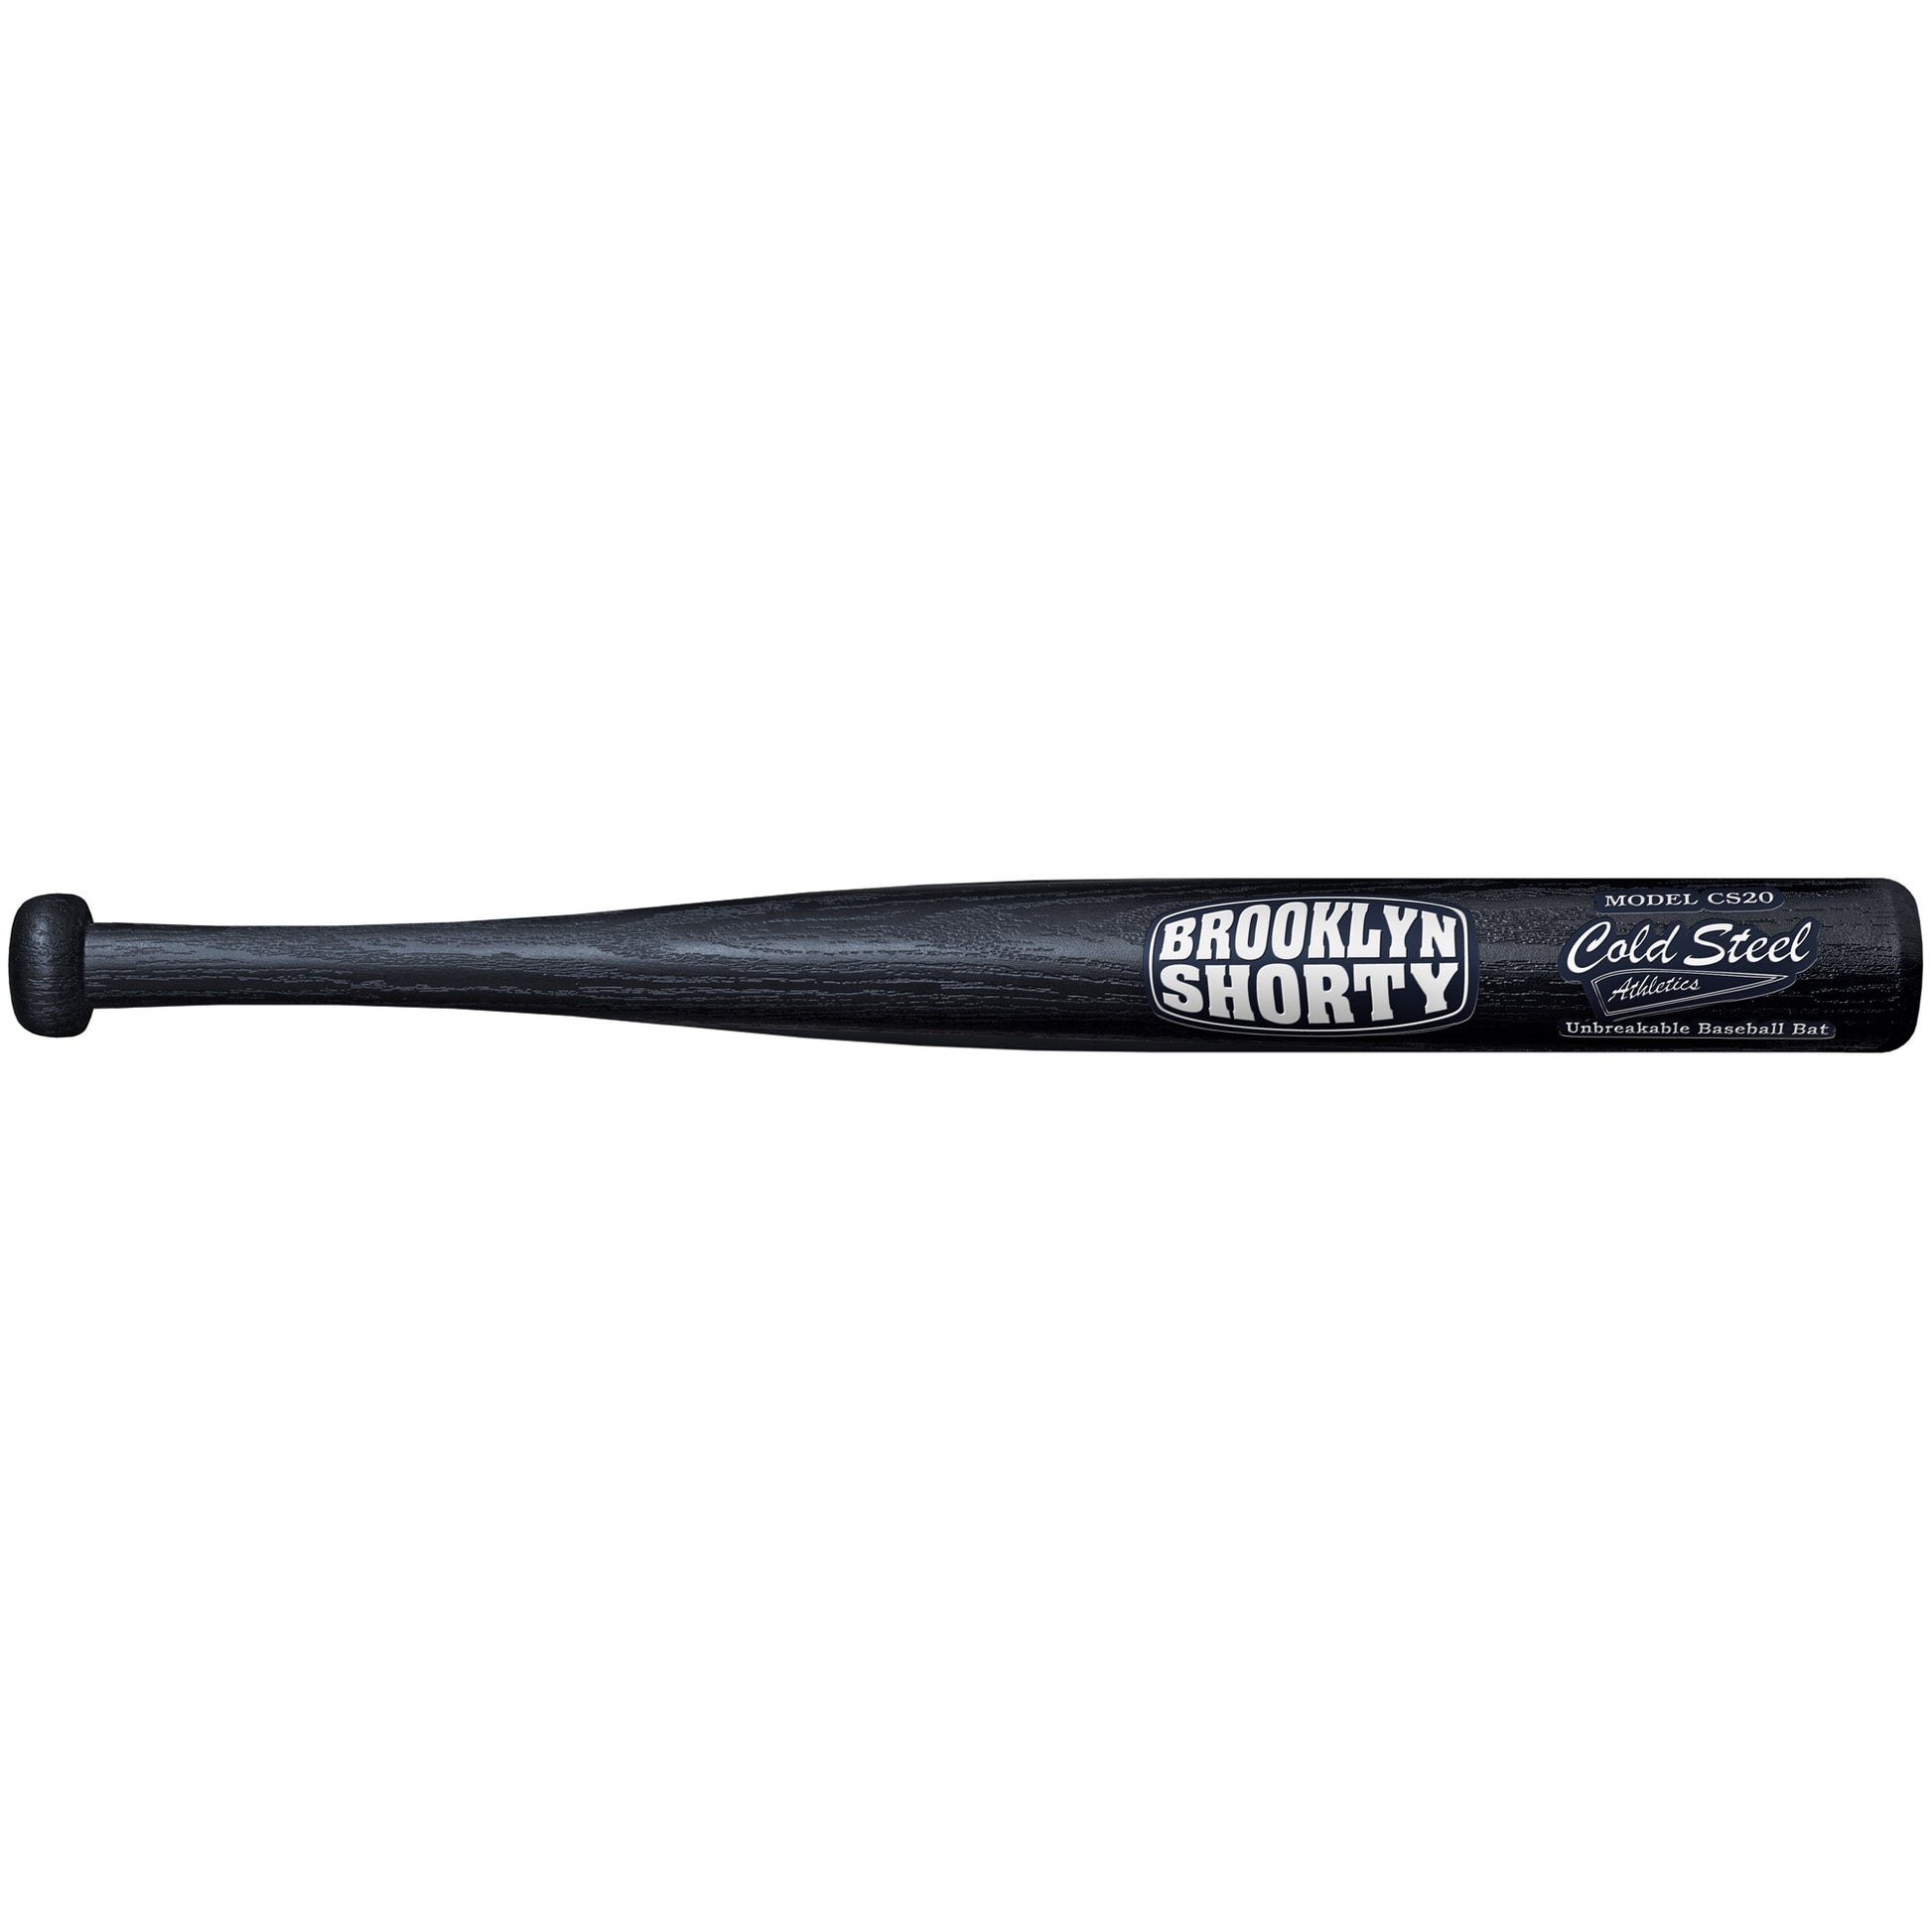 Cold Steel Brooklyn Shorty Tool Black Bat 20 Length Polypropylene CS-92BST - California Shooting Supplies